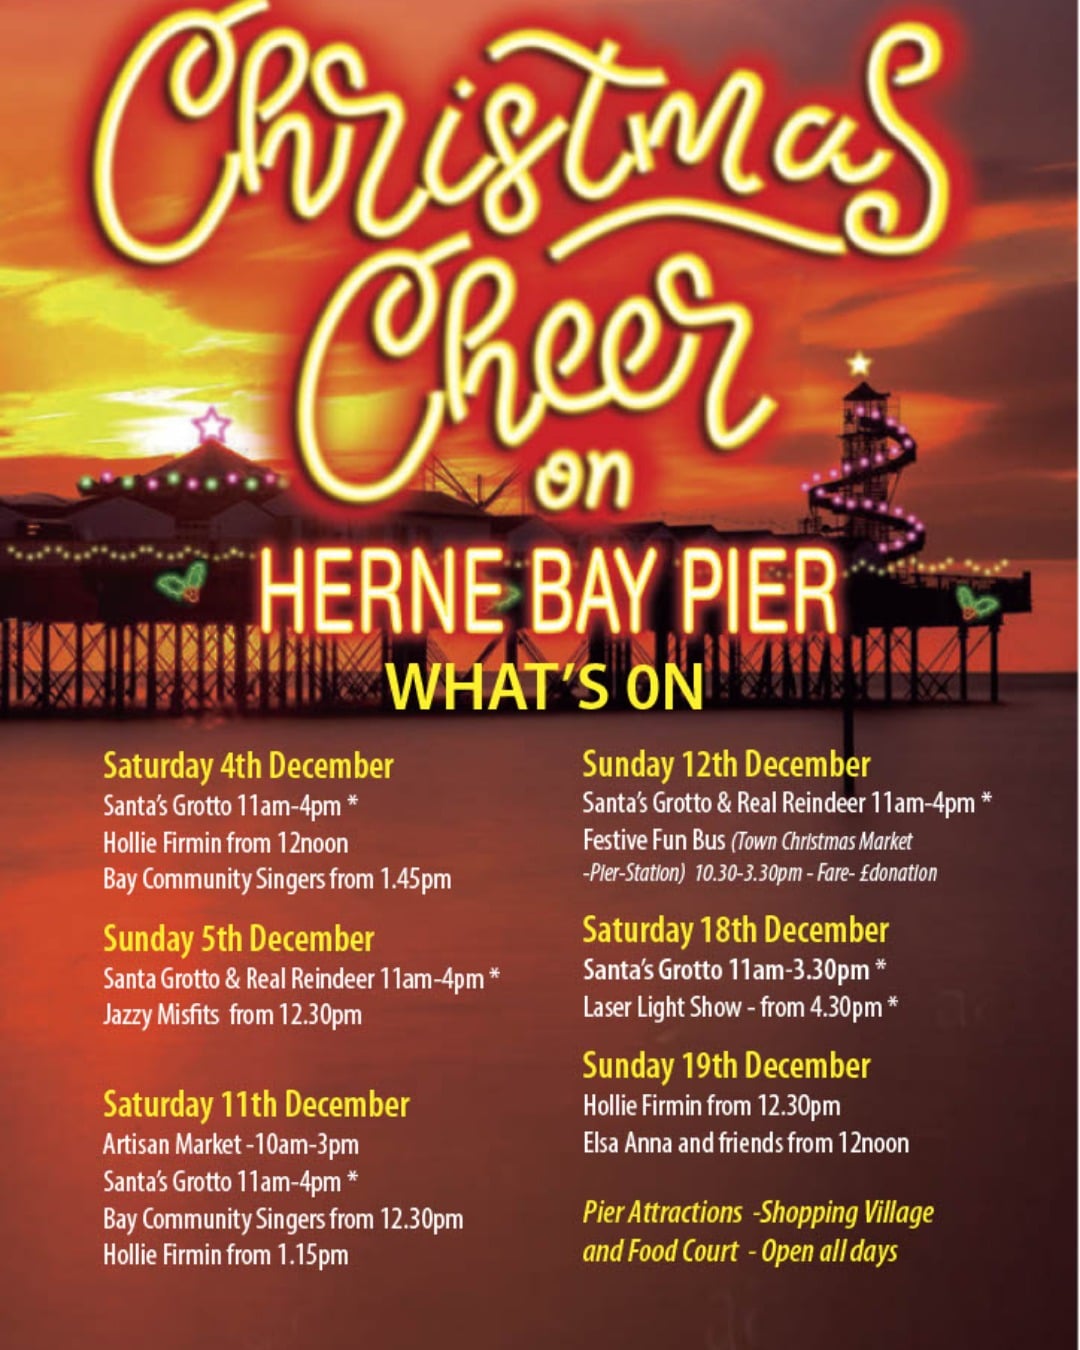 Christmas Cheer on Herne Bay Pier